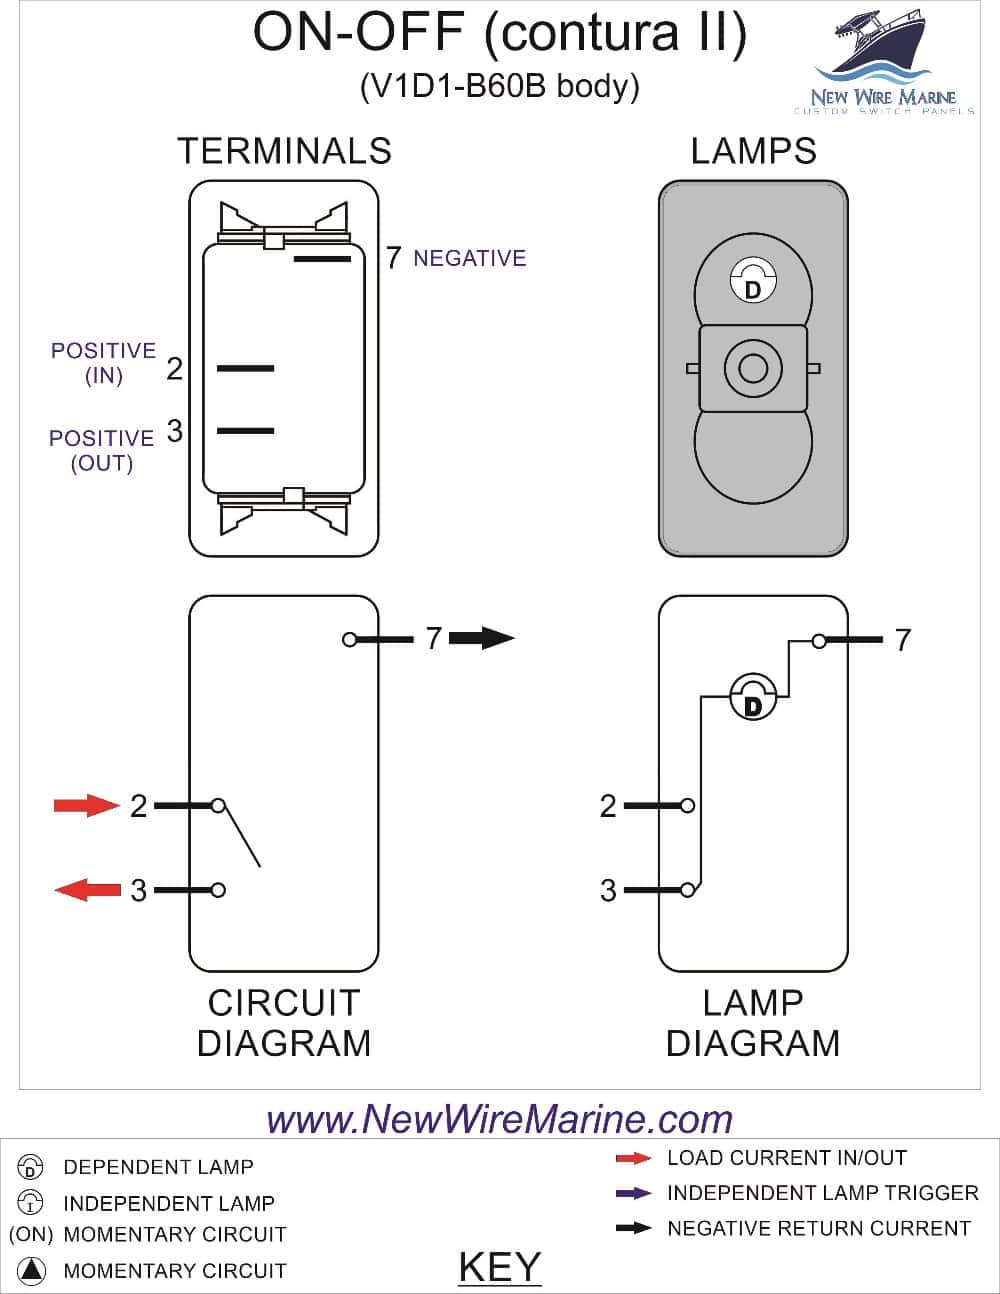 Toggle Switch Diagram - Wiring Diagram Blog - 3 Prong Toggle Switch Wiring Diagram